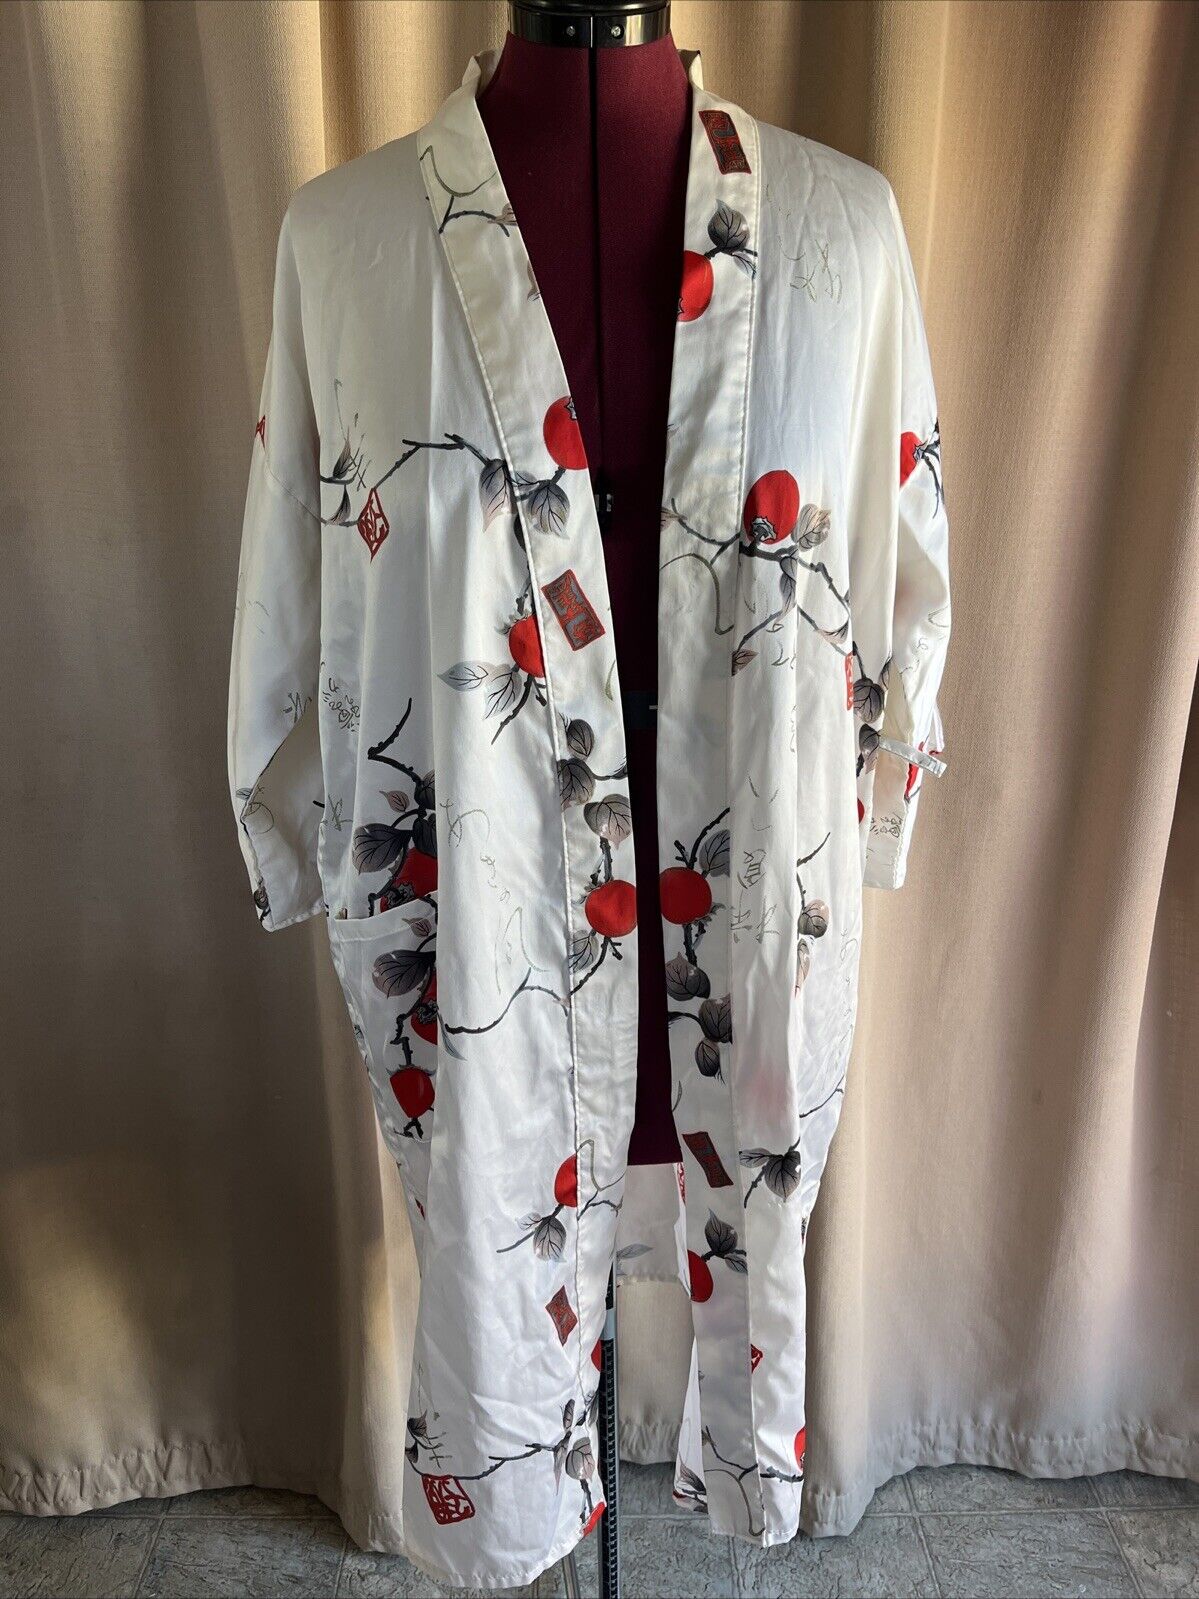 ICHIBAN Kimono Robe Vintage Japan  Missing Belt Approximately 40 Inch Long